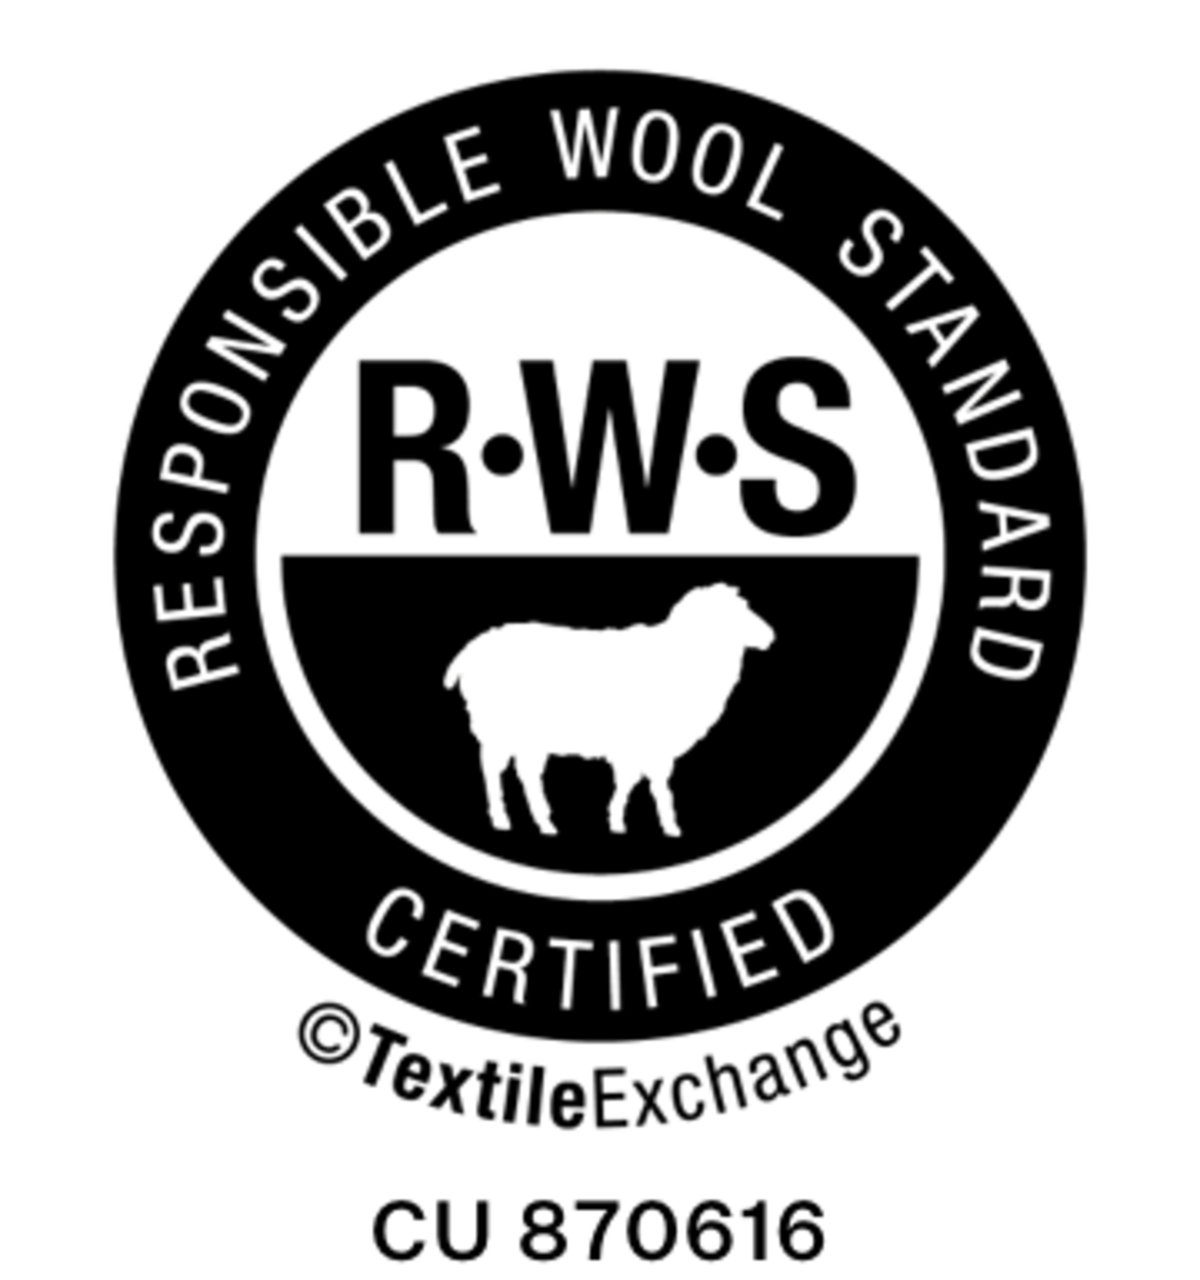 Responsible Wool Standard logo